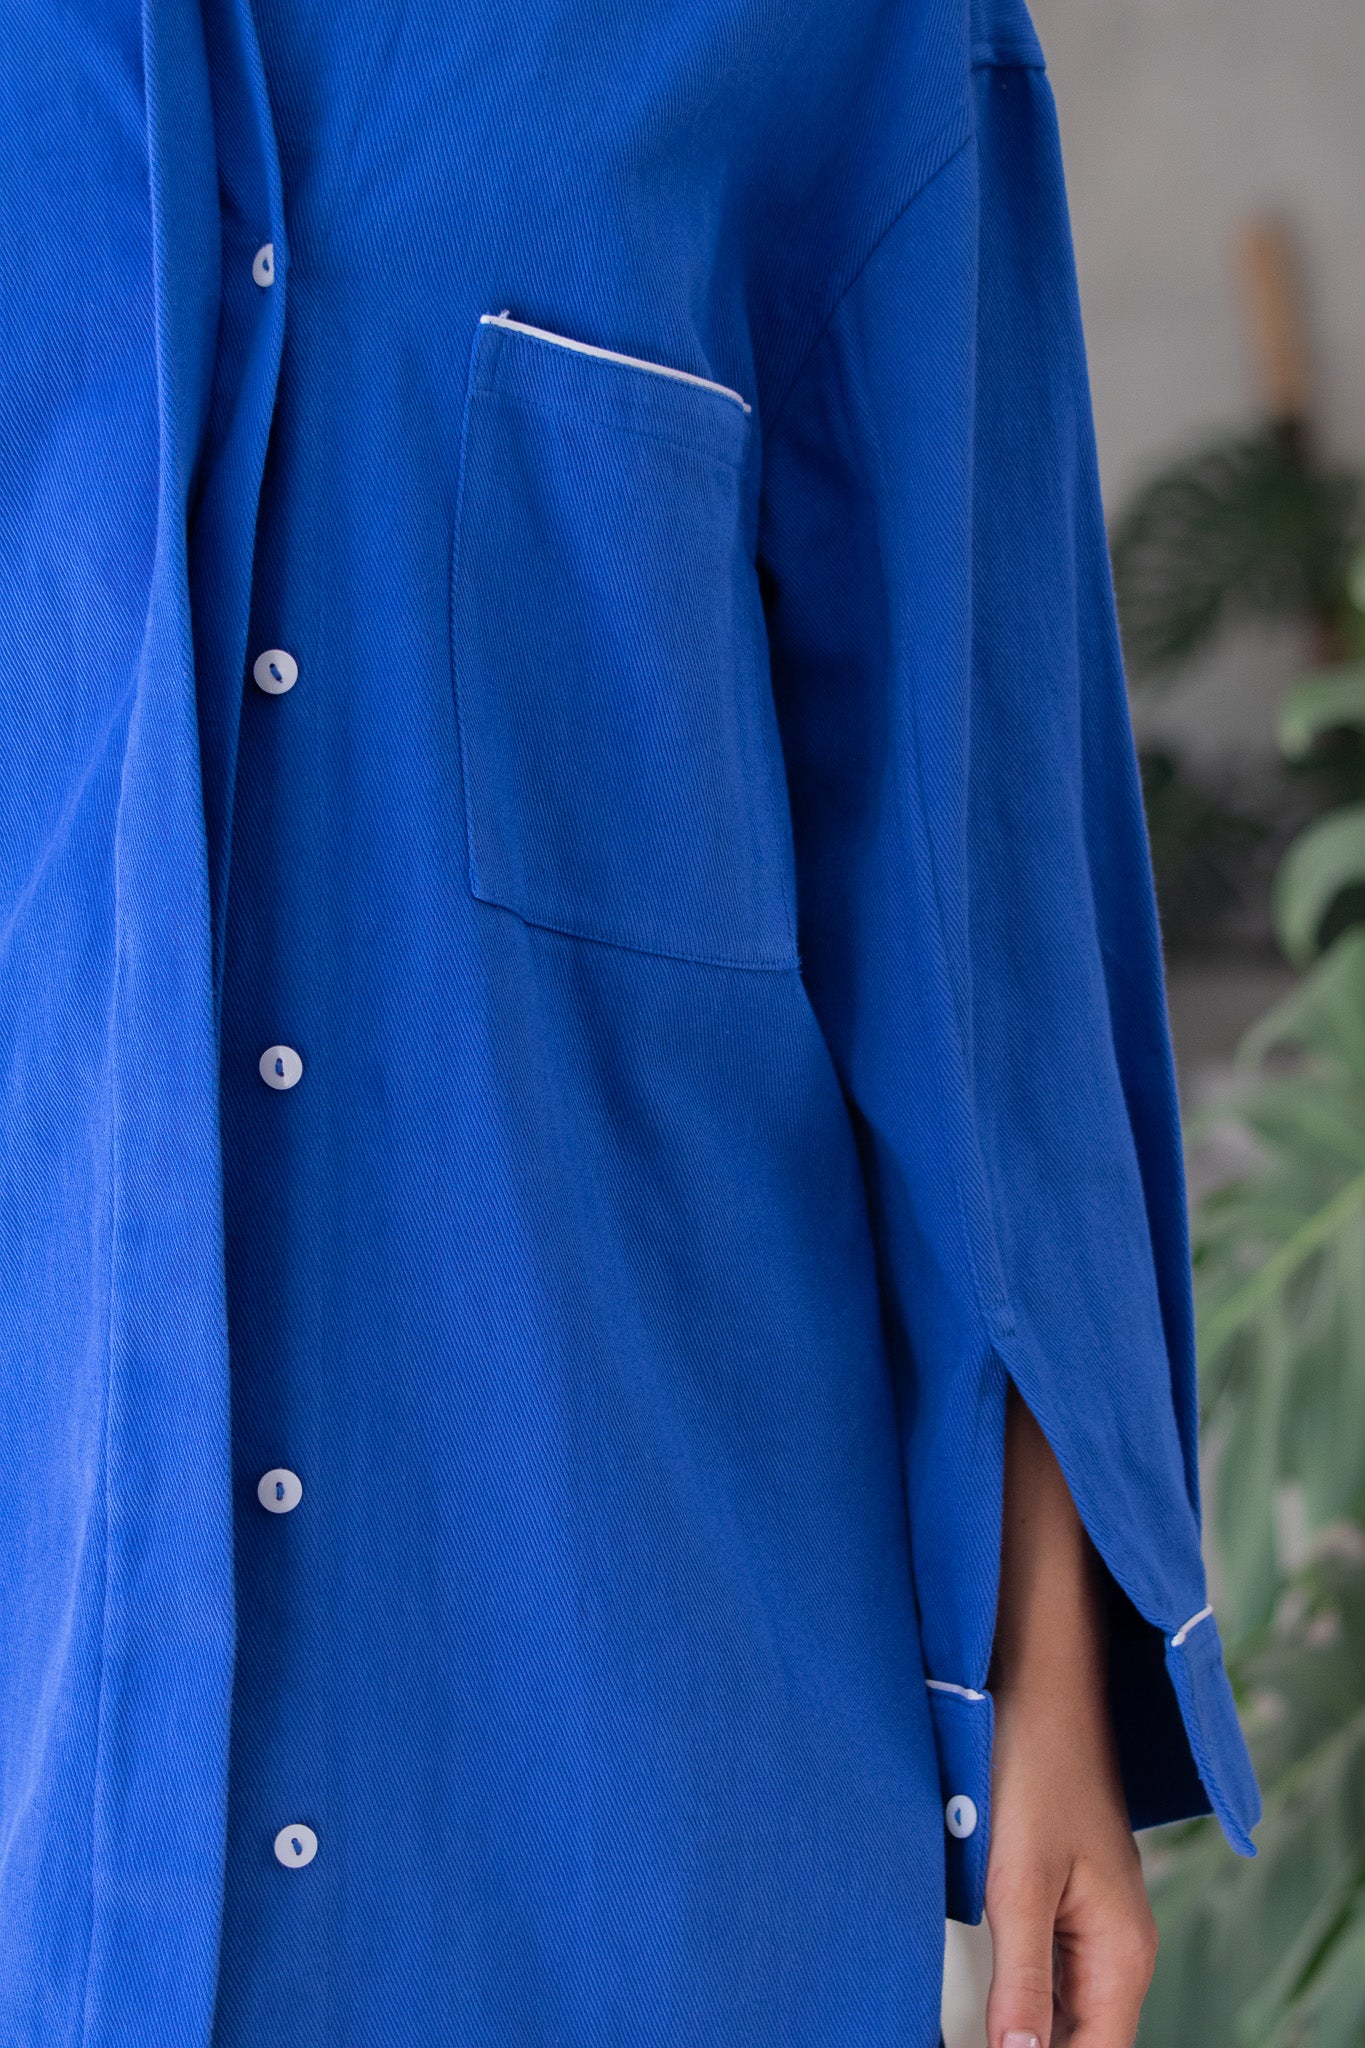 close pocket, button and cuff detail shot of denim blue jacket 